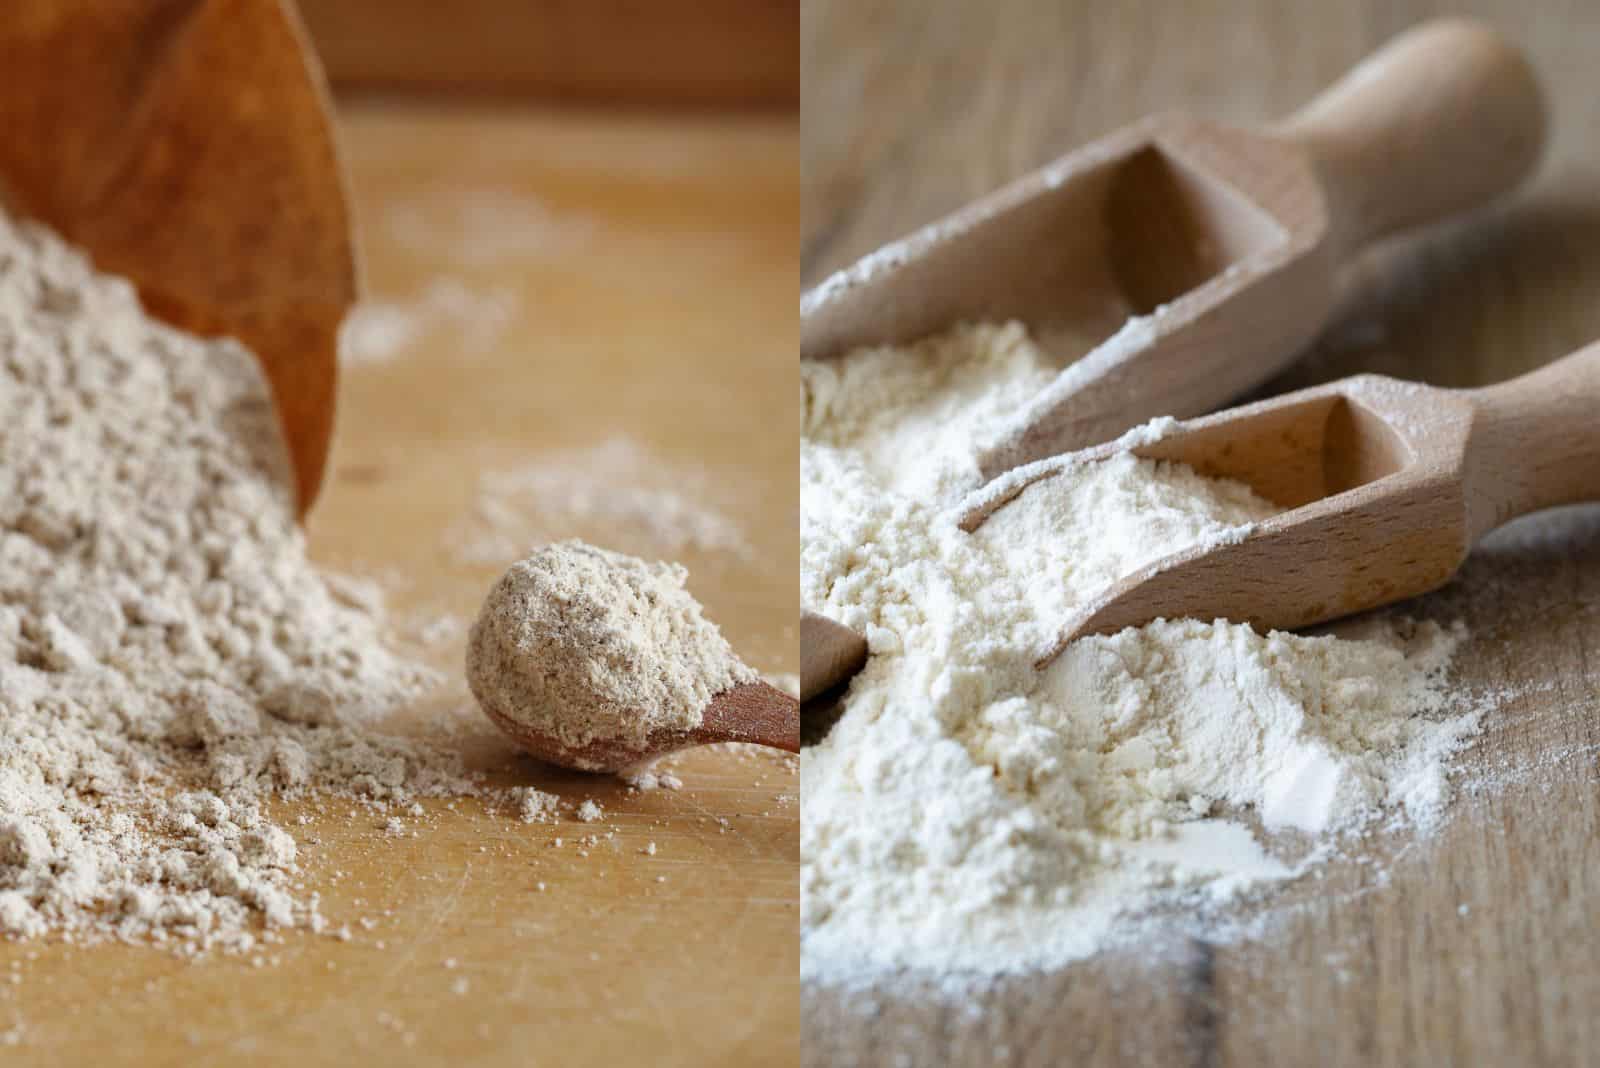 Almond Flour Vs All Purpose Flour